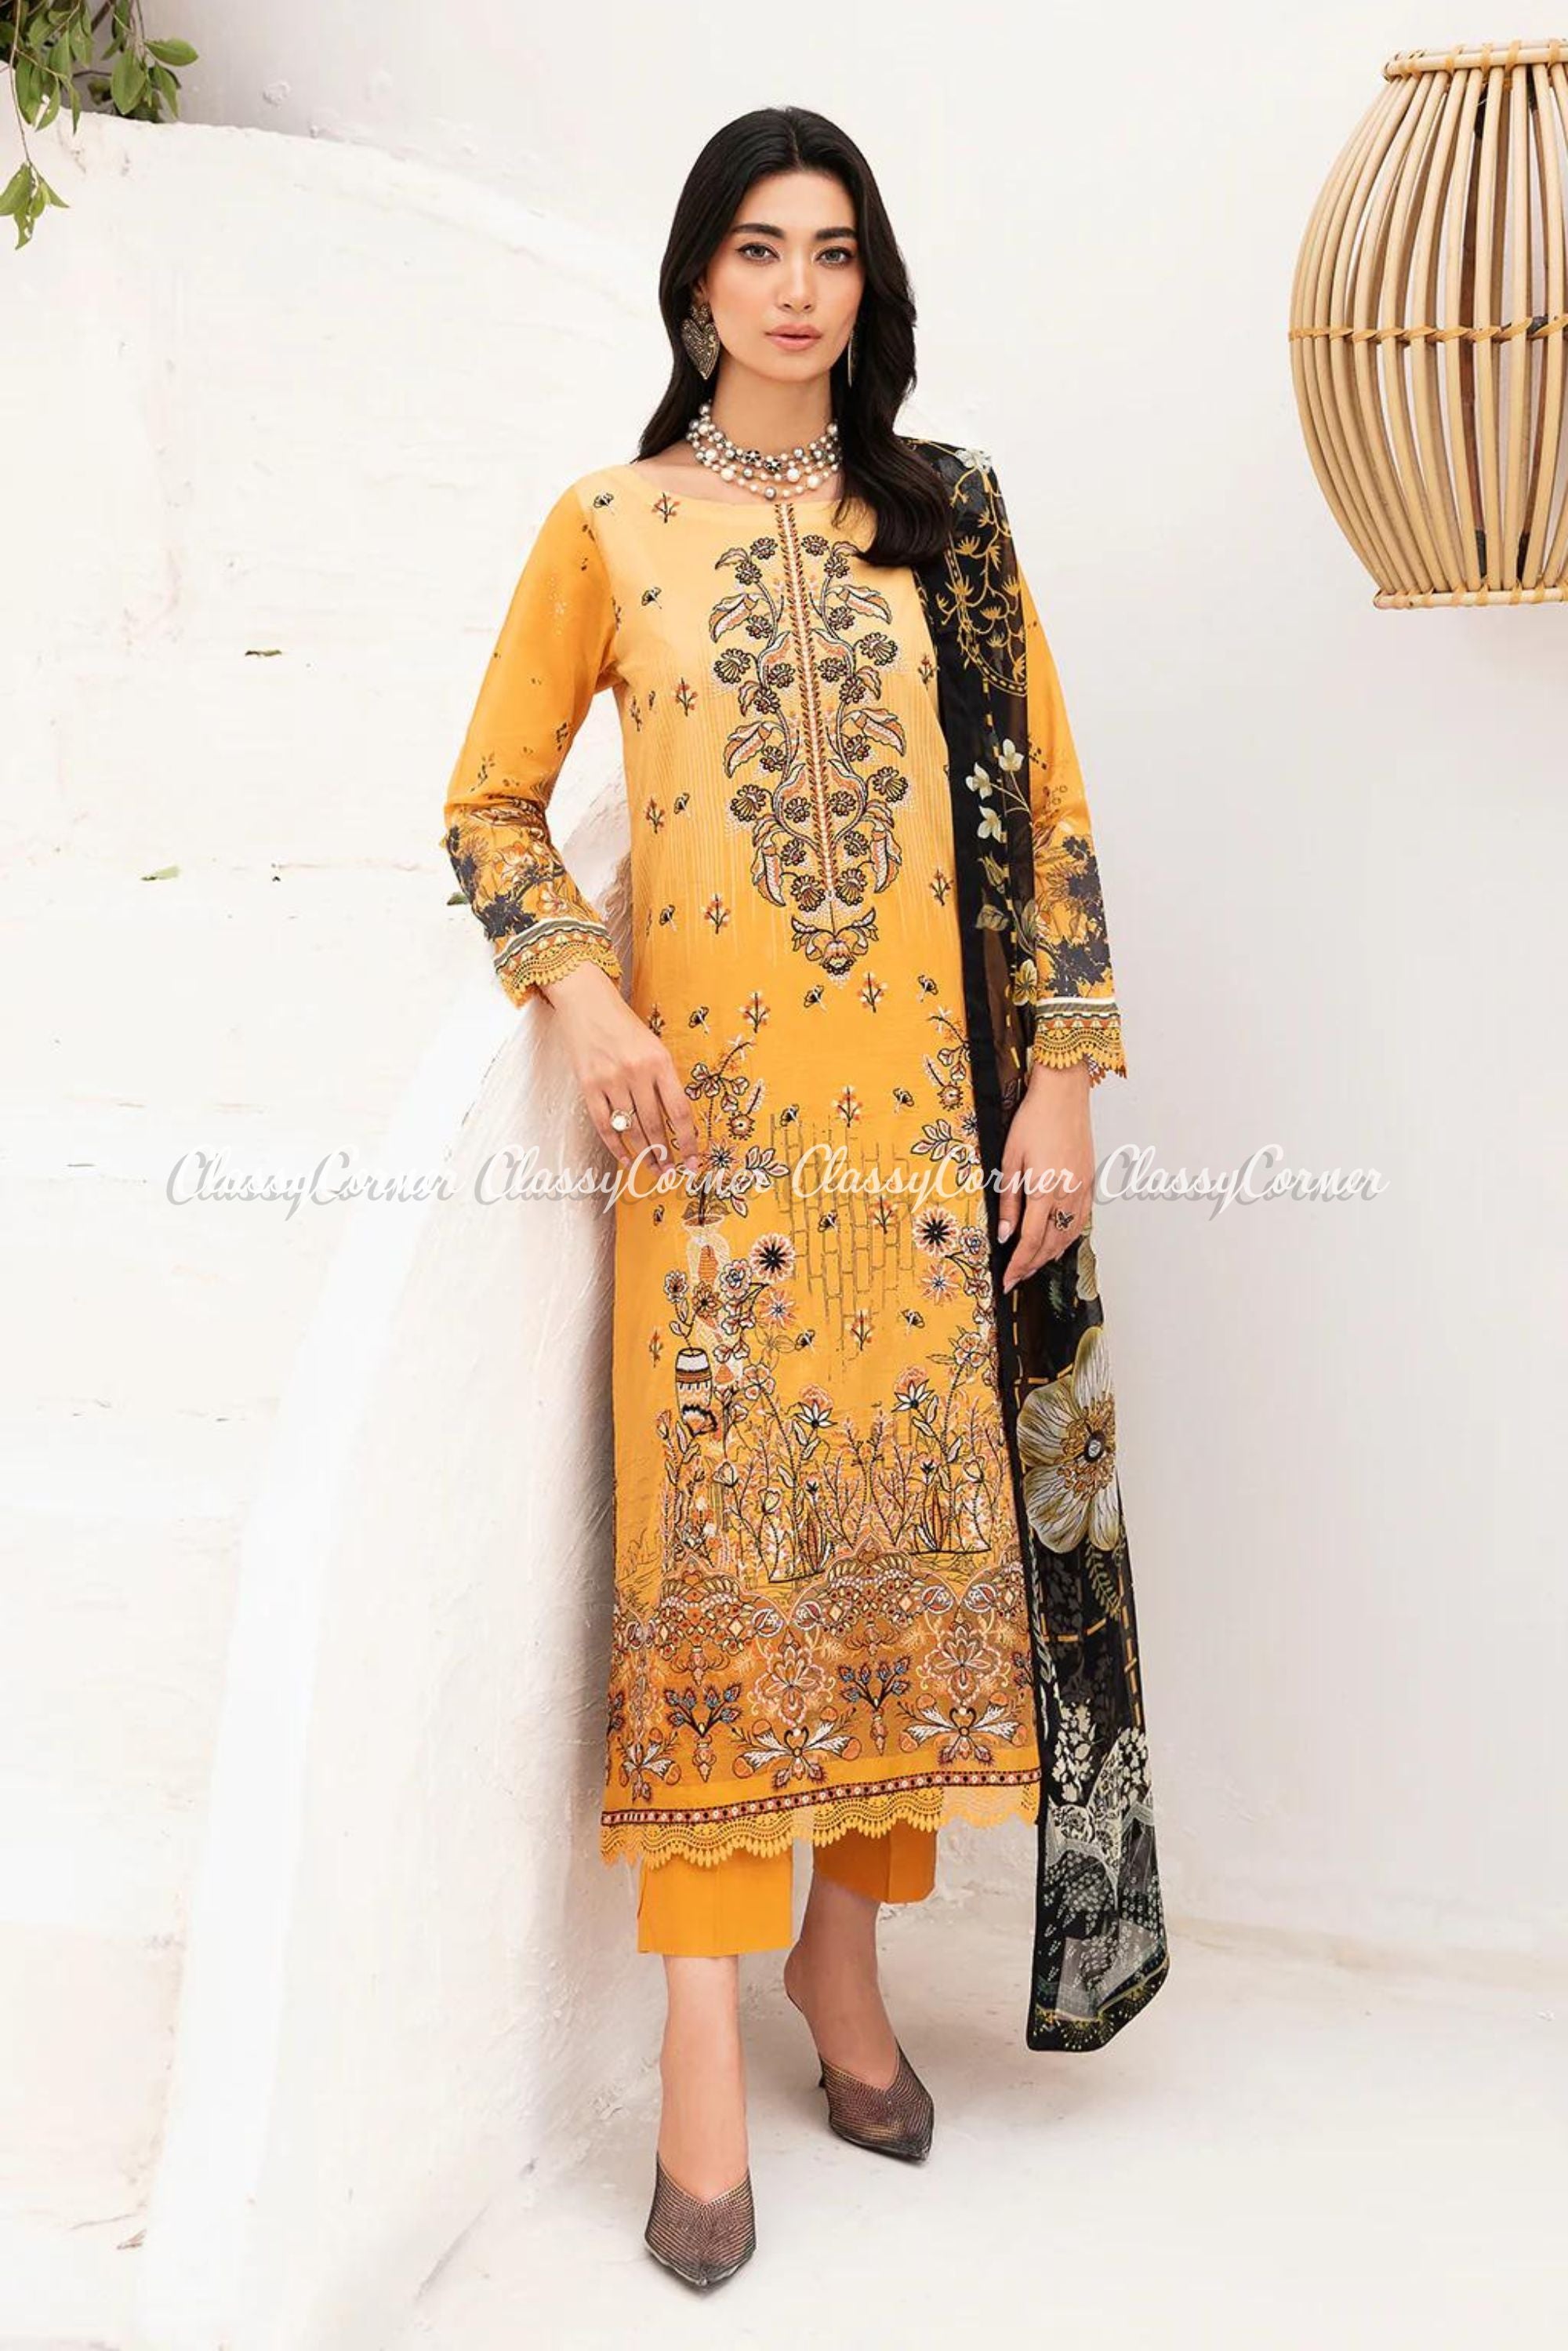 Traditional Pakistani Semi Formal Outfits